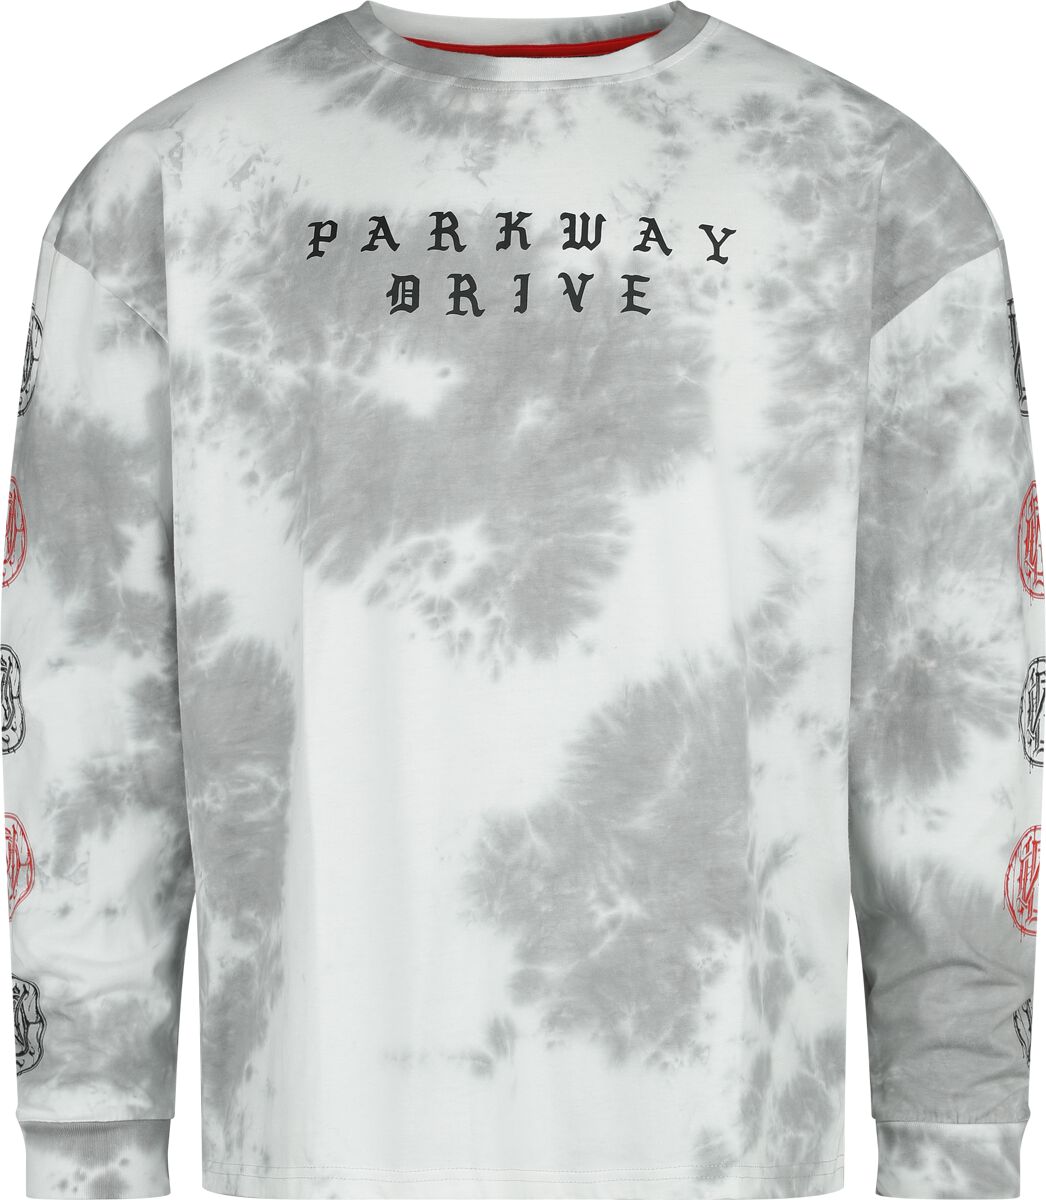 Parkway Drive EMP Signature Collection - Oversize Langarmshirt weiß grau in XL von Parkway Drive